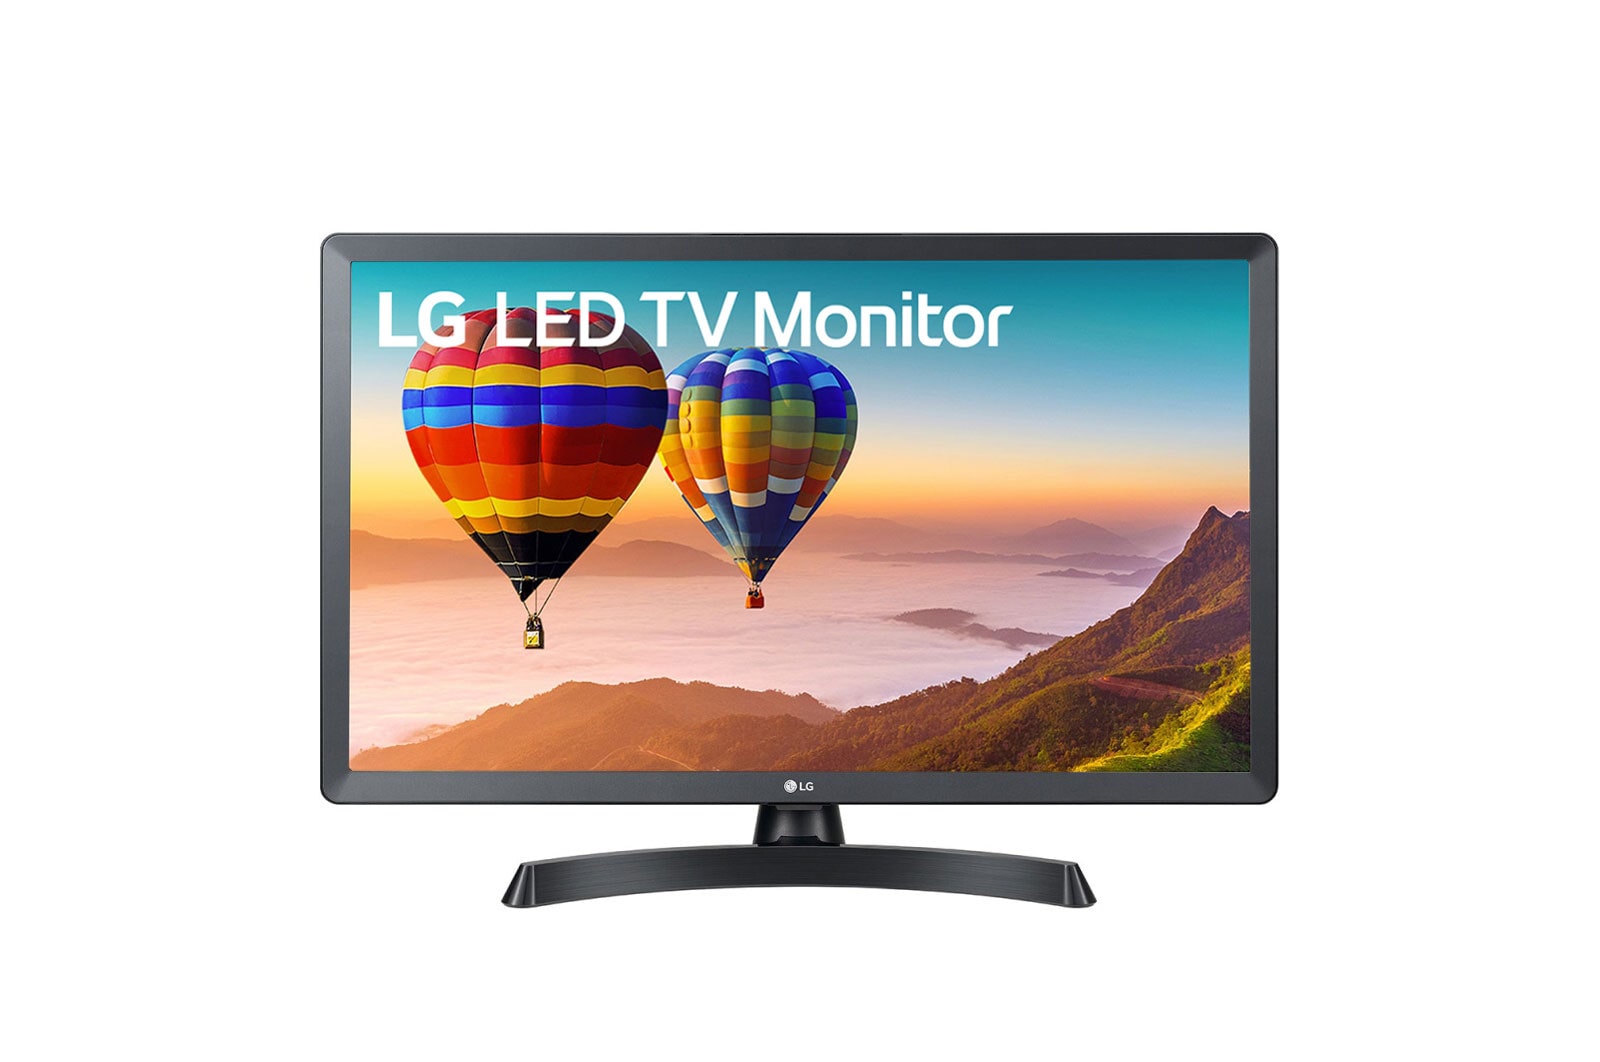 LG Monitor TV LED 28” 16:9 HD Ready Smart, 28TN515S-PZ